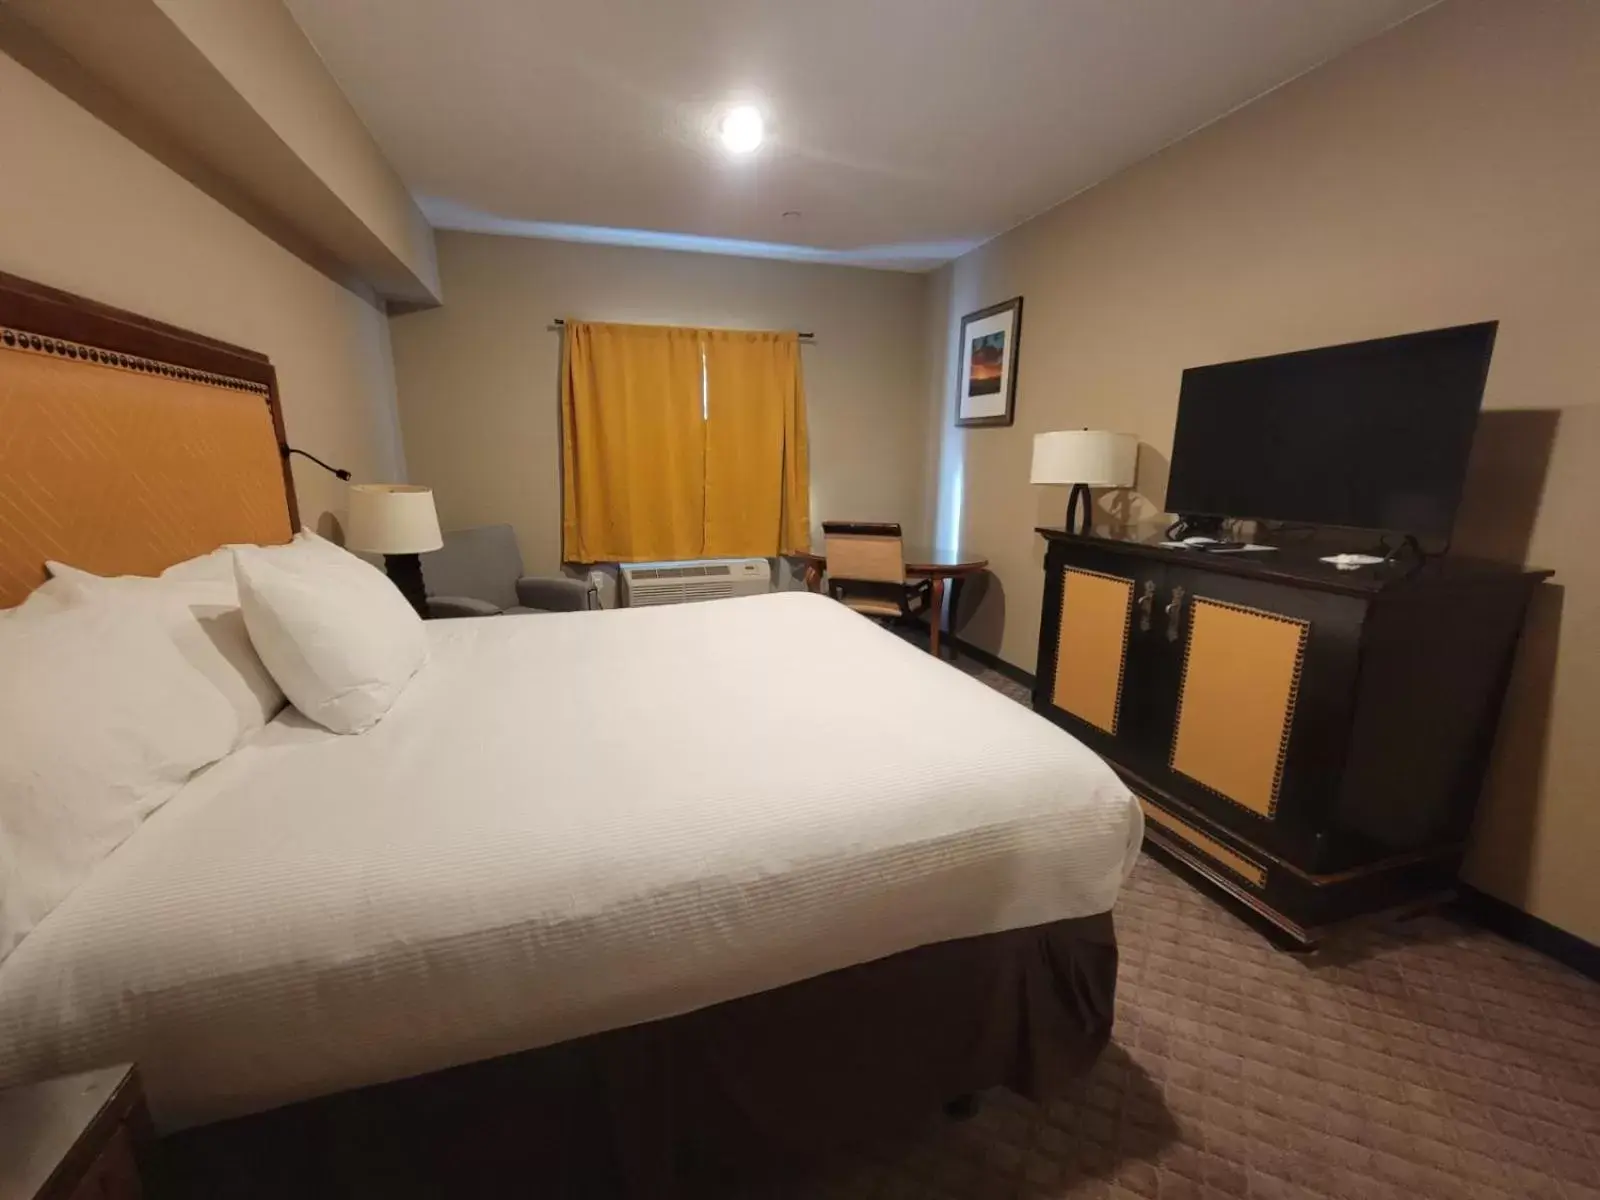 Bedroom, Bed in Wagon Wheel Hotel